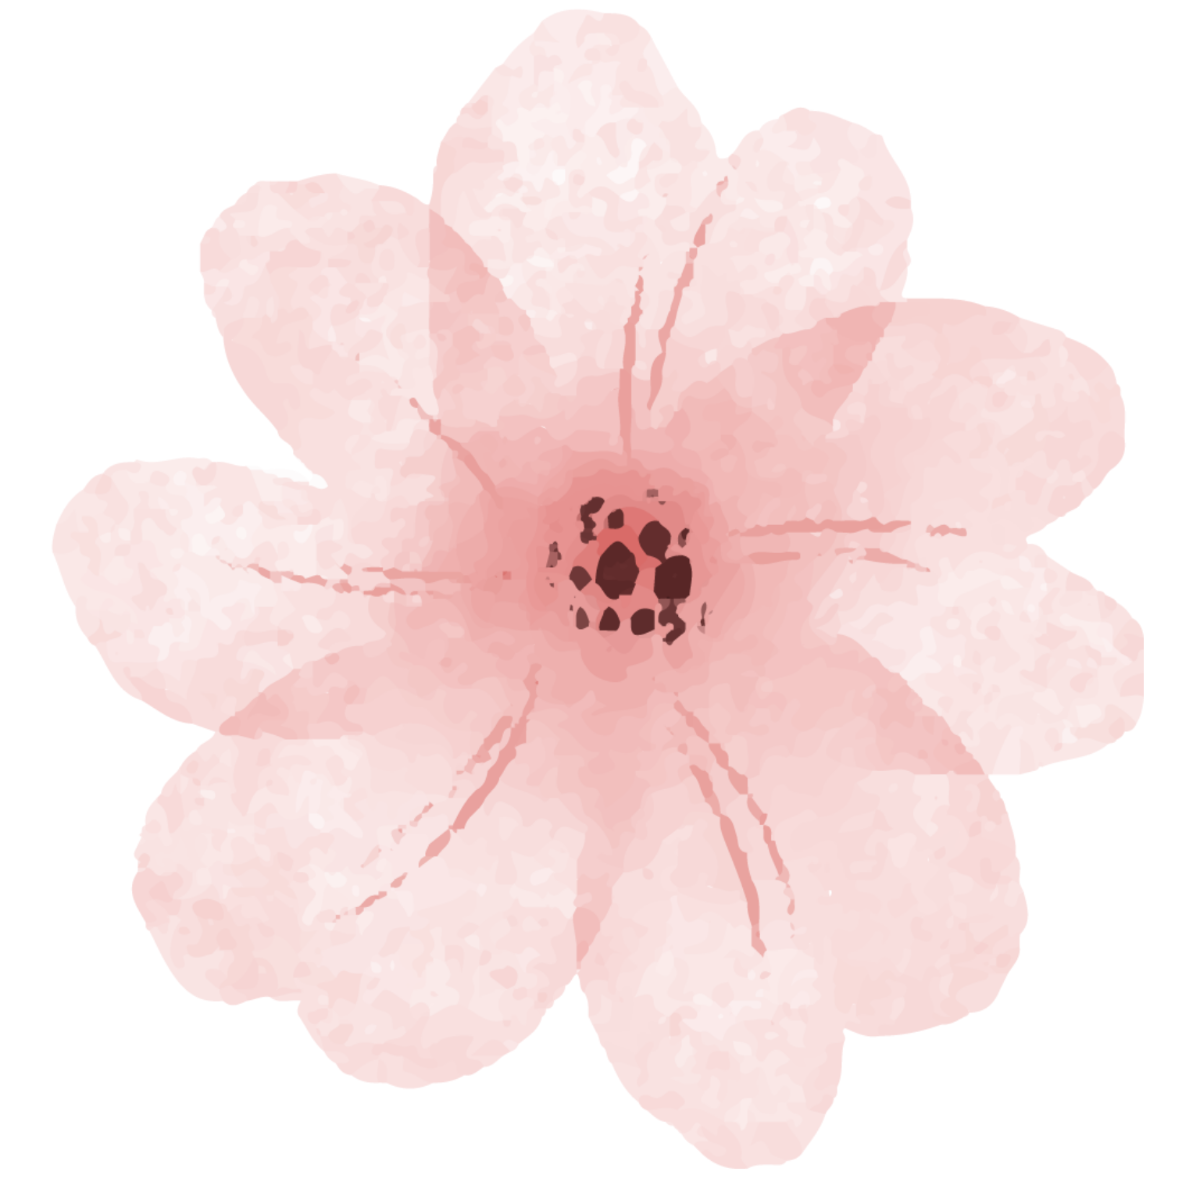 Pink Watercolor Flower